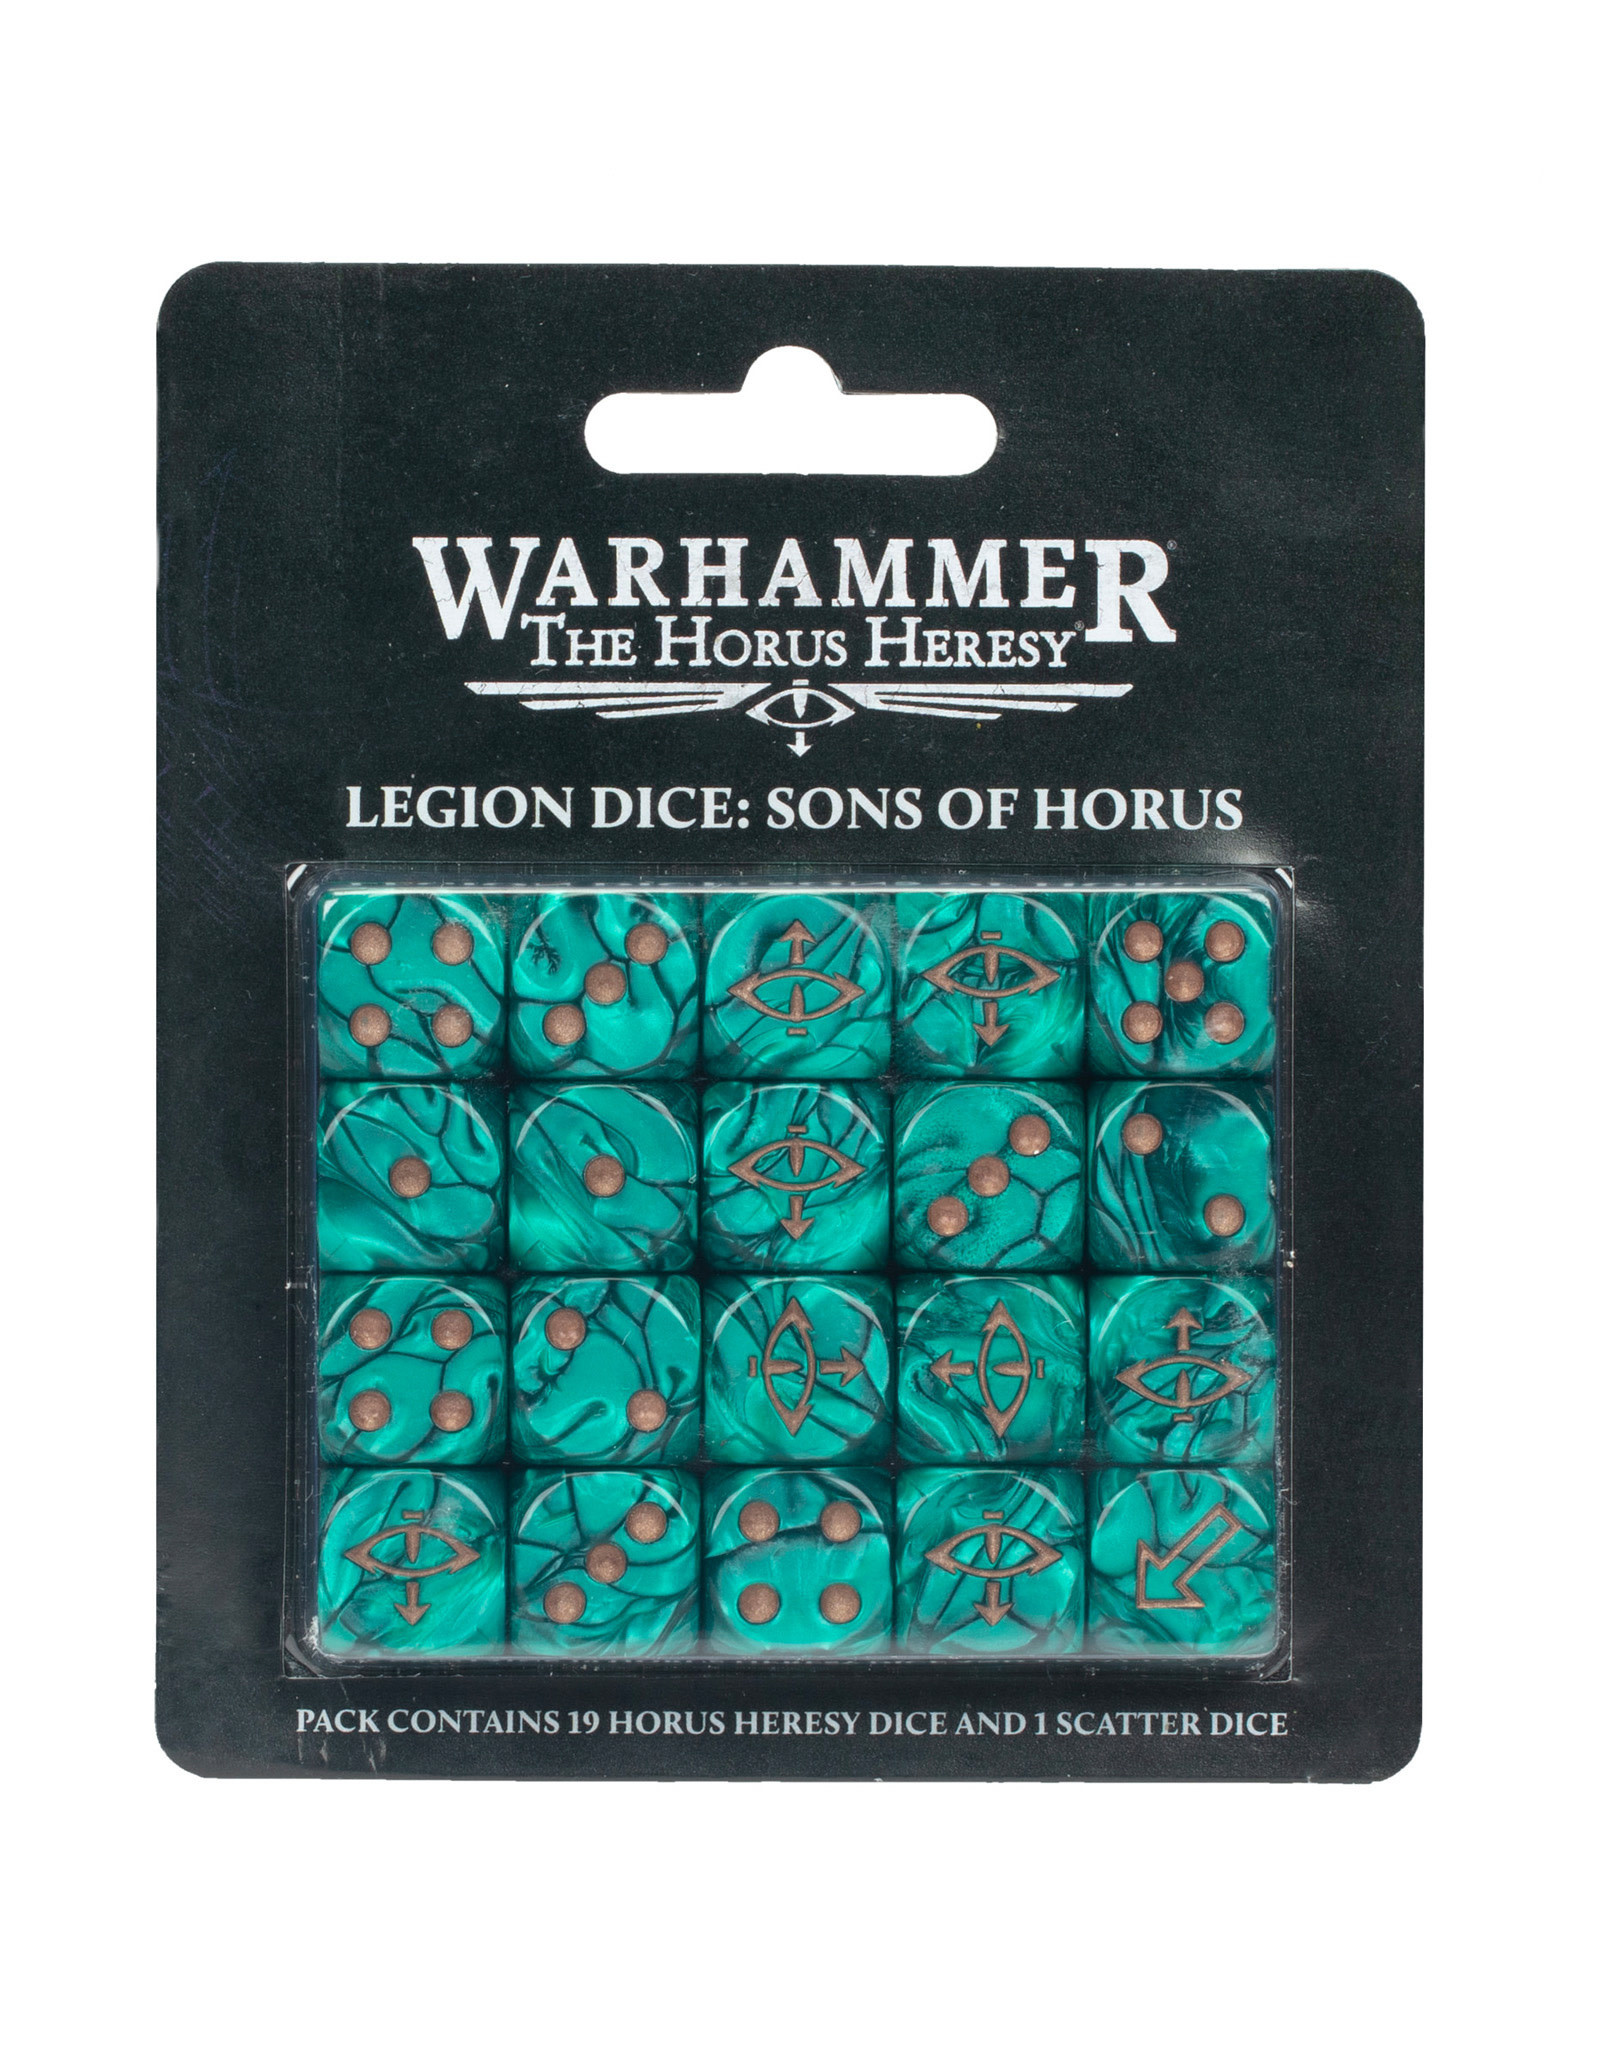 Warhammer Horus Heresy Pre-Orders: New 'Sons of Horus' Miniatures